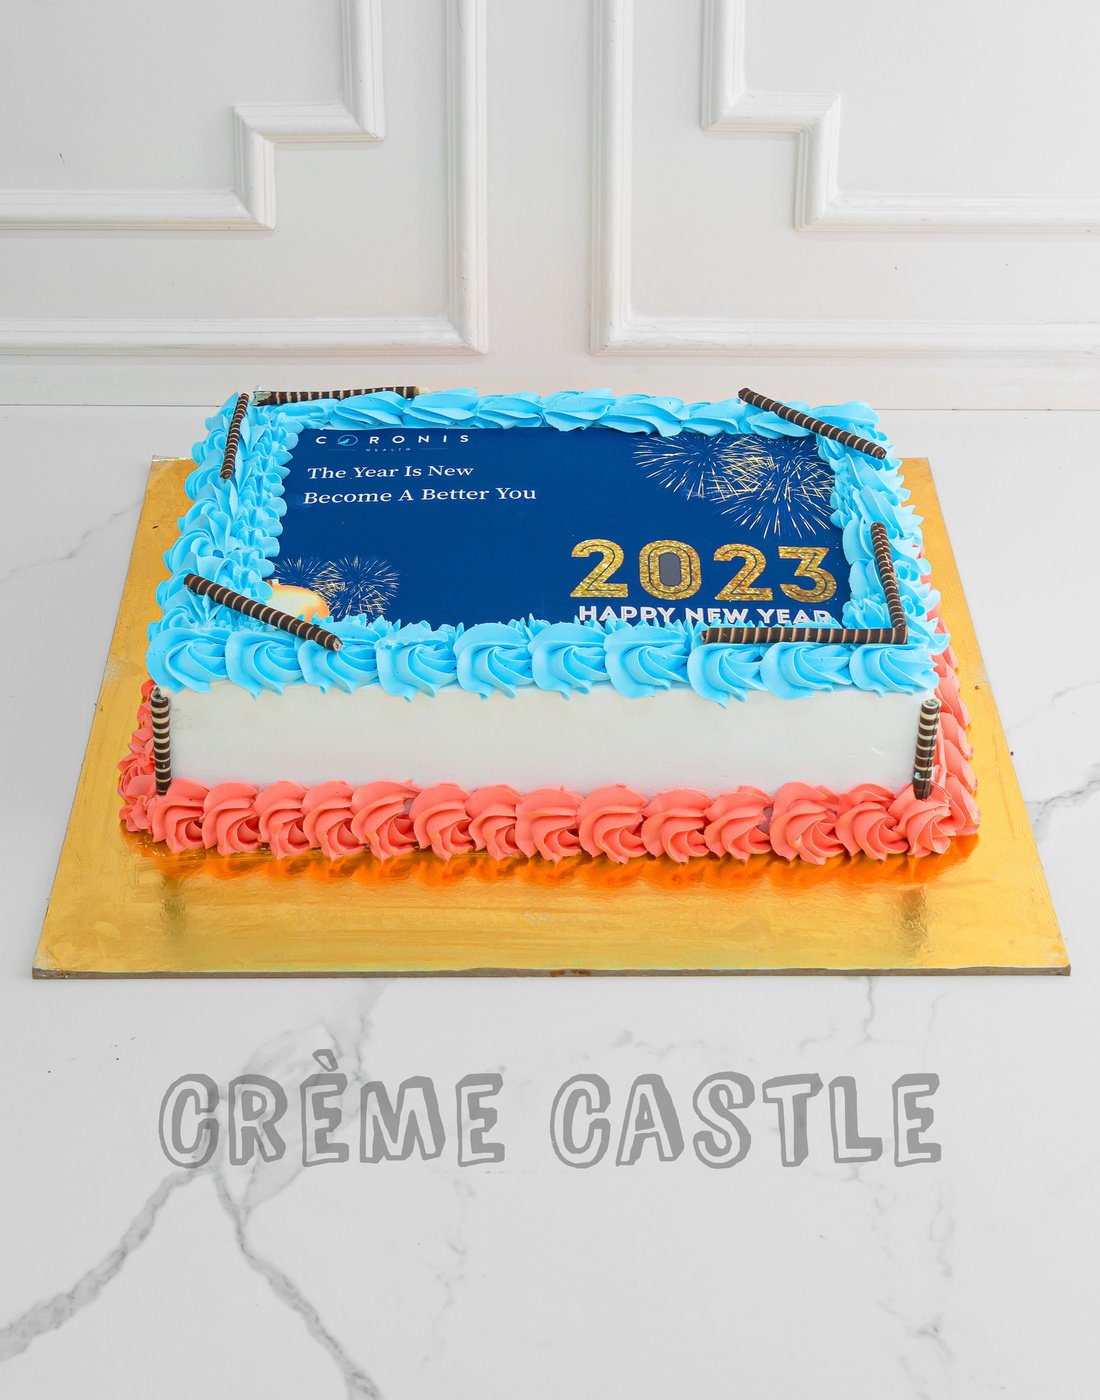 Cakes for Corporate Events around Glasgow & Edinburgh